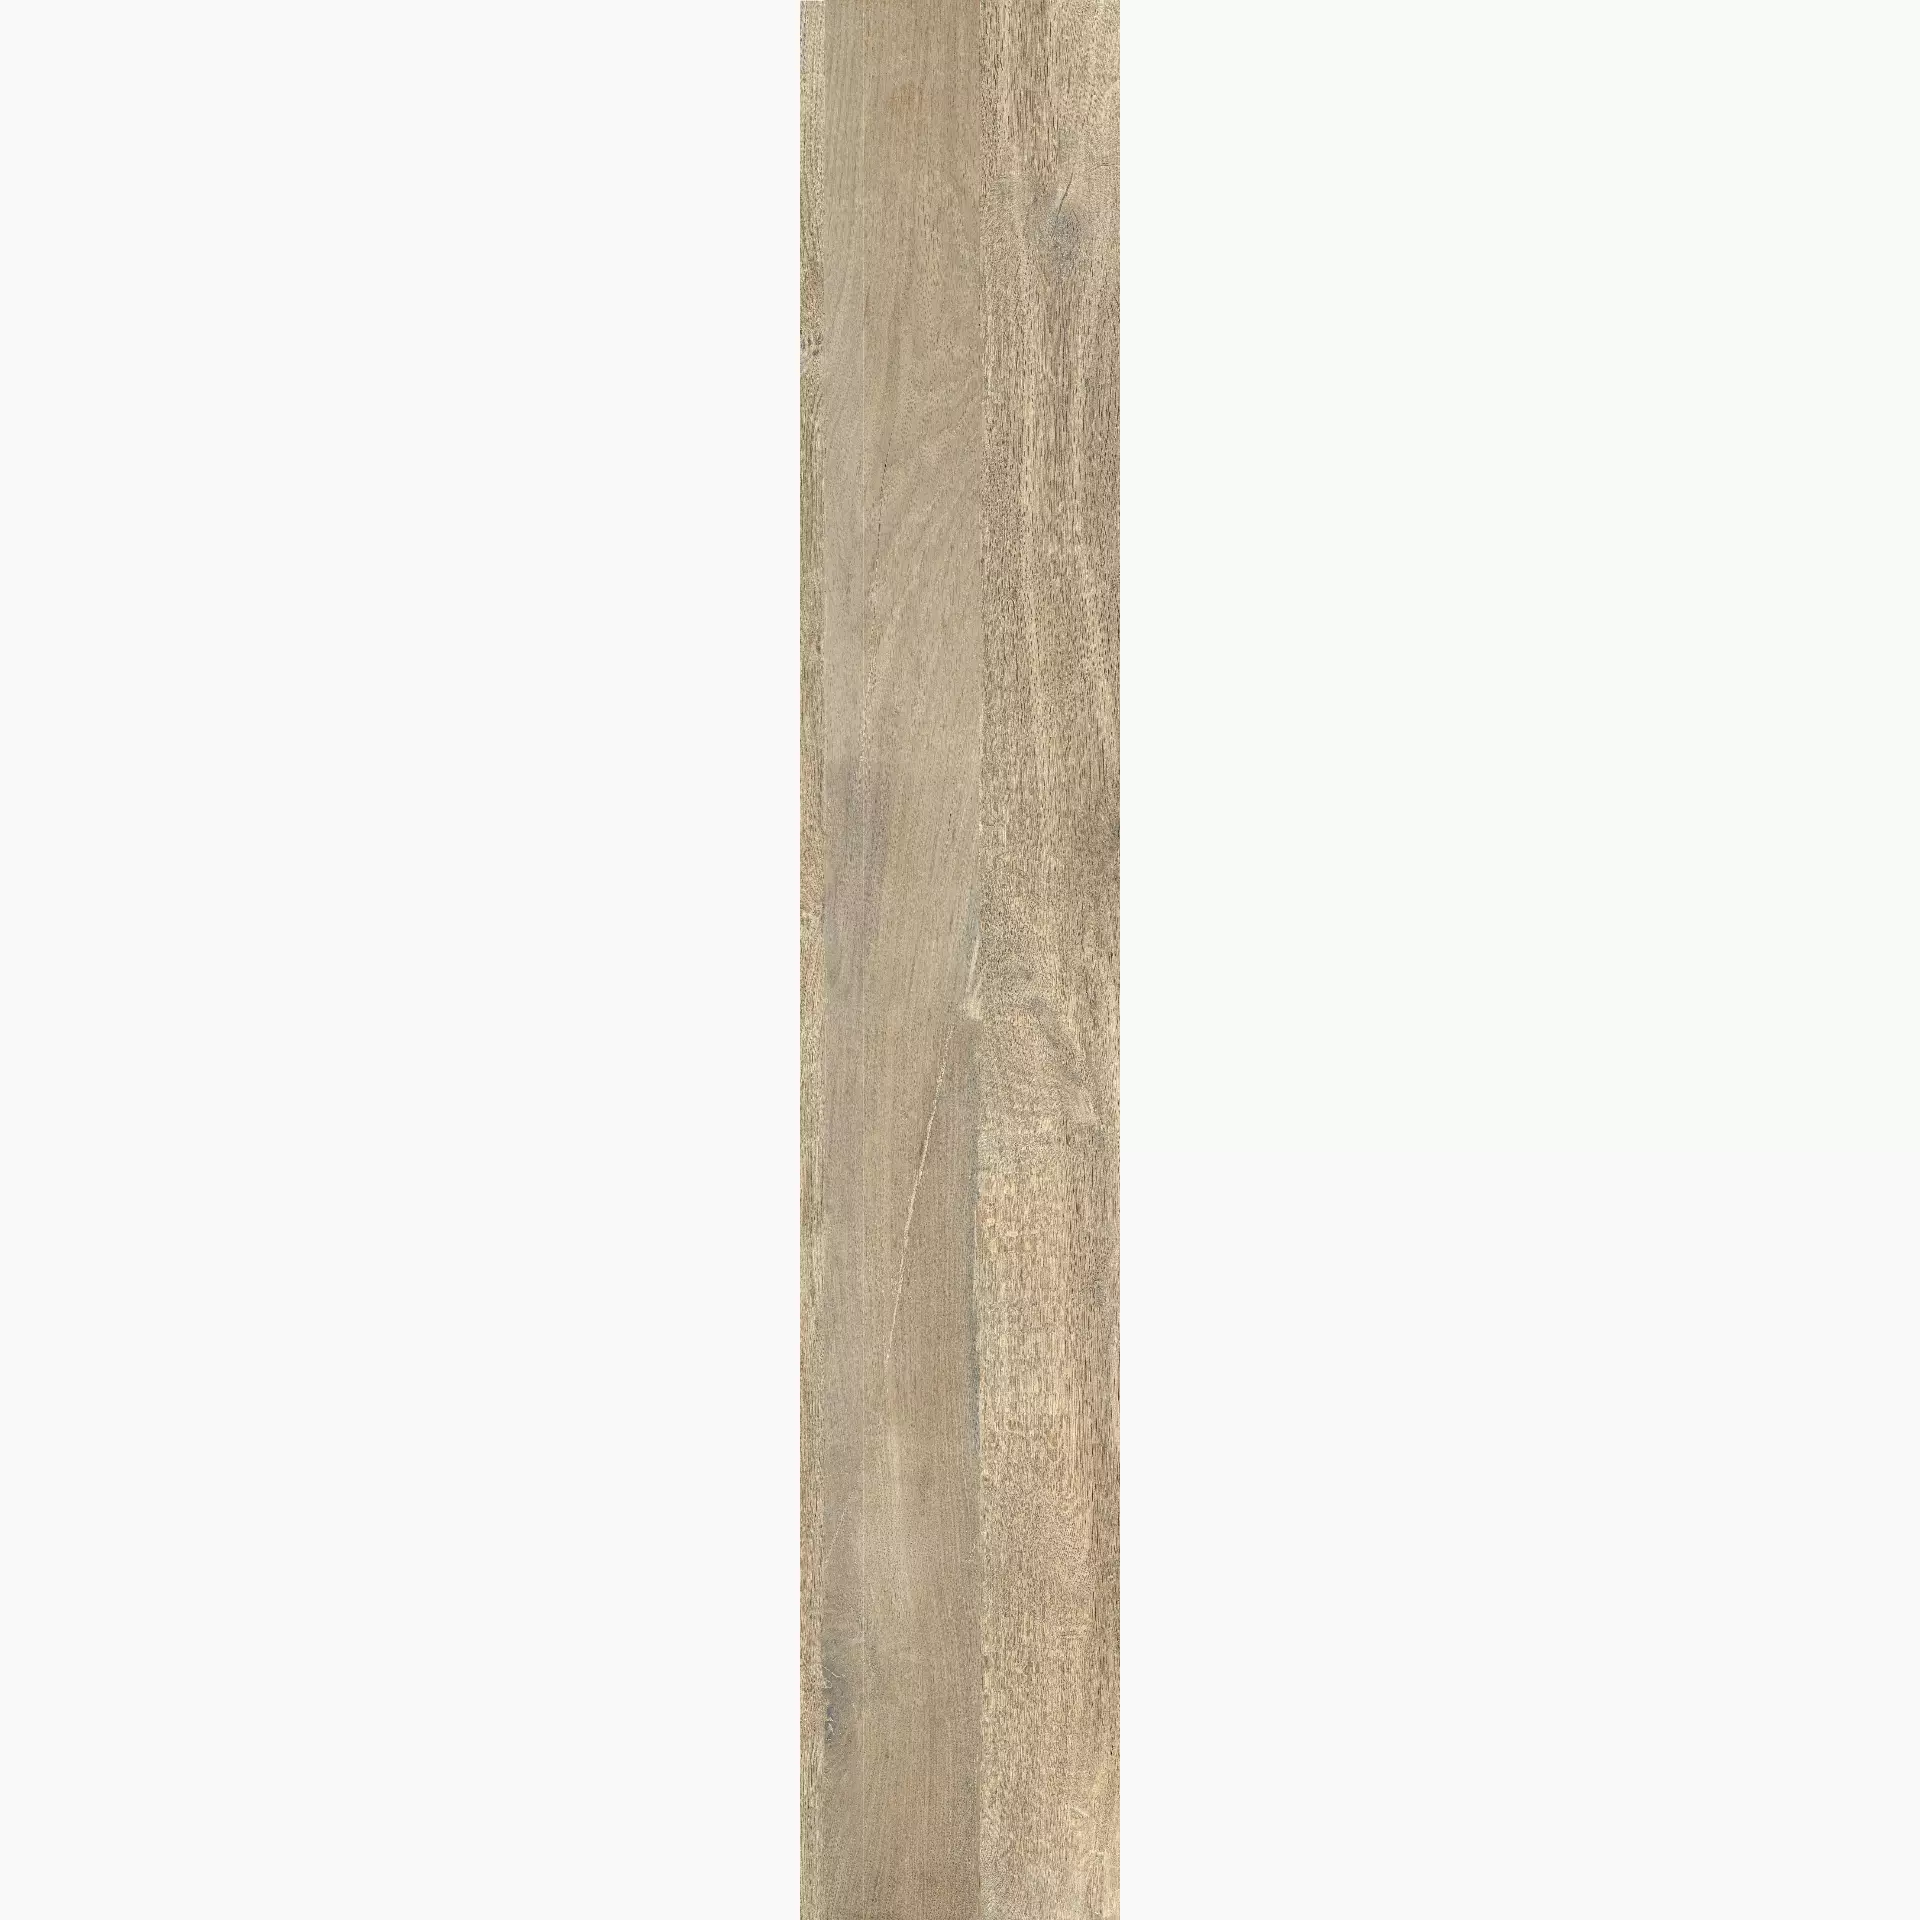 Fondovalle Woodblock Brave Oak Real Matt WOB004 24x240cm rectified 6,5mm